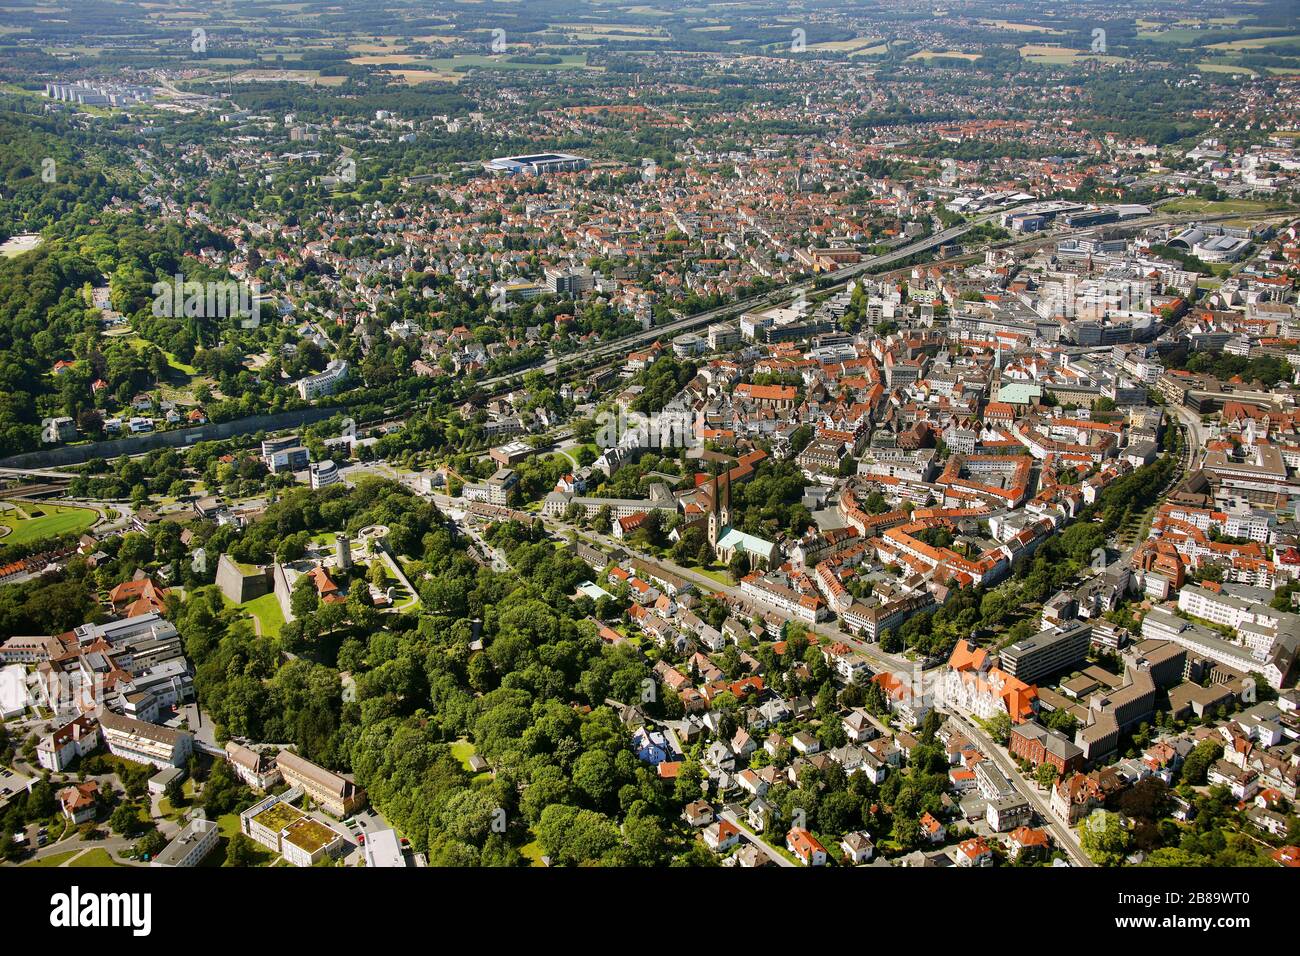 , historic centre of Bielefeld with castle Sparrenburg, in the background the football stadium Bielefelder Alm, 27.06.2011, aerial view, Germany, North Rhine-Westphalia, East Westphalia, Bielefeld Stock Photo